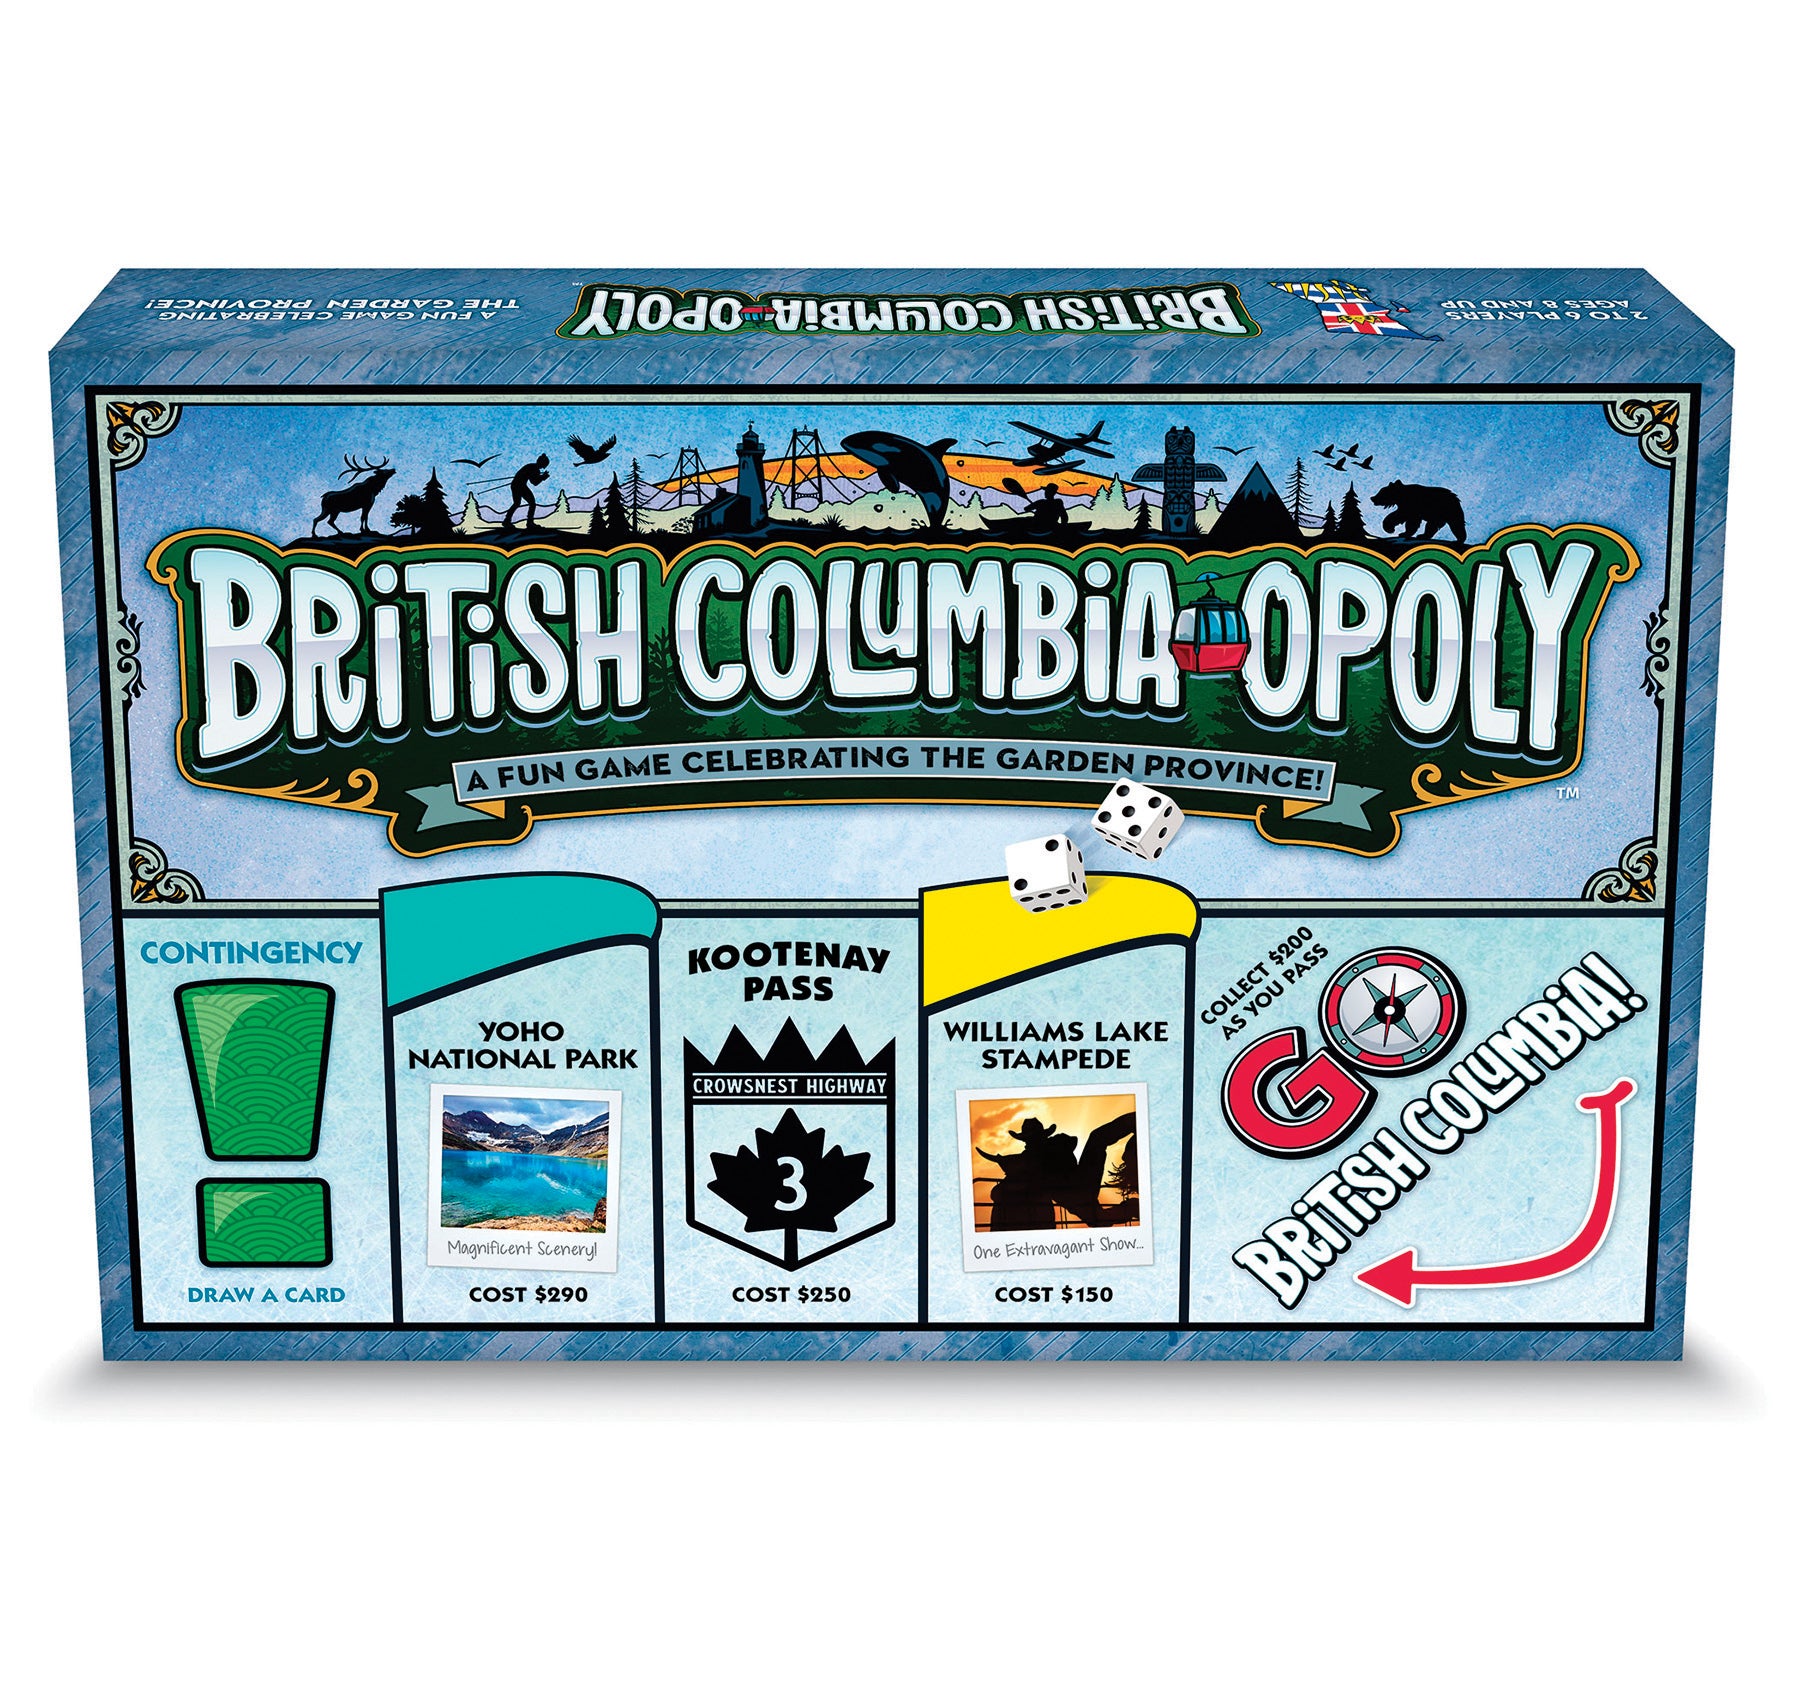 British Columbia Opoly